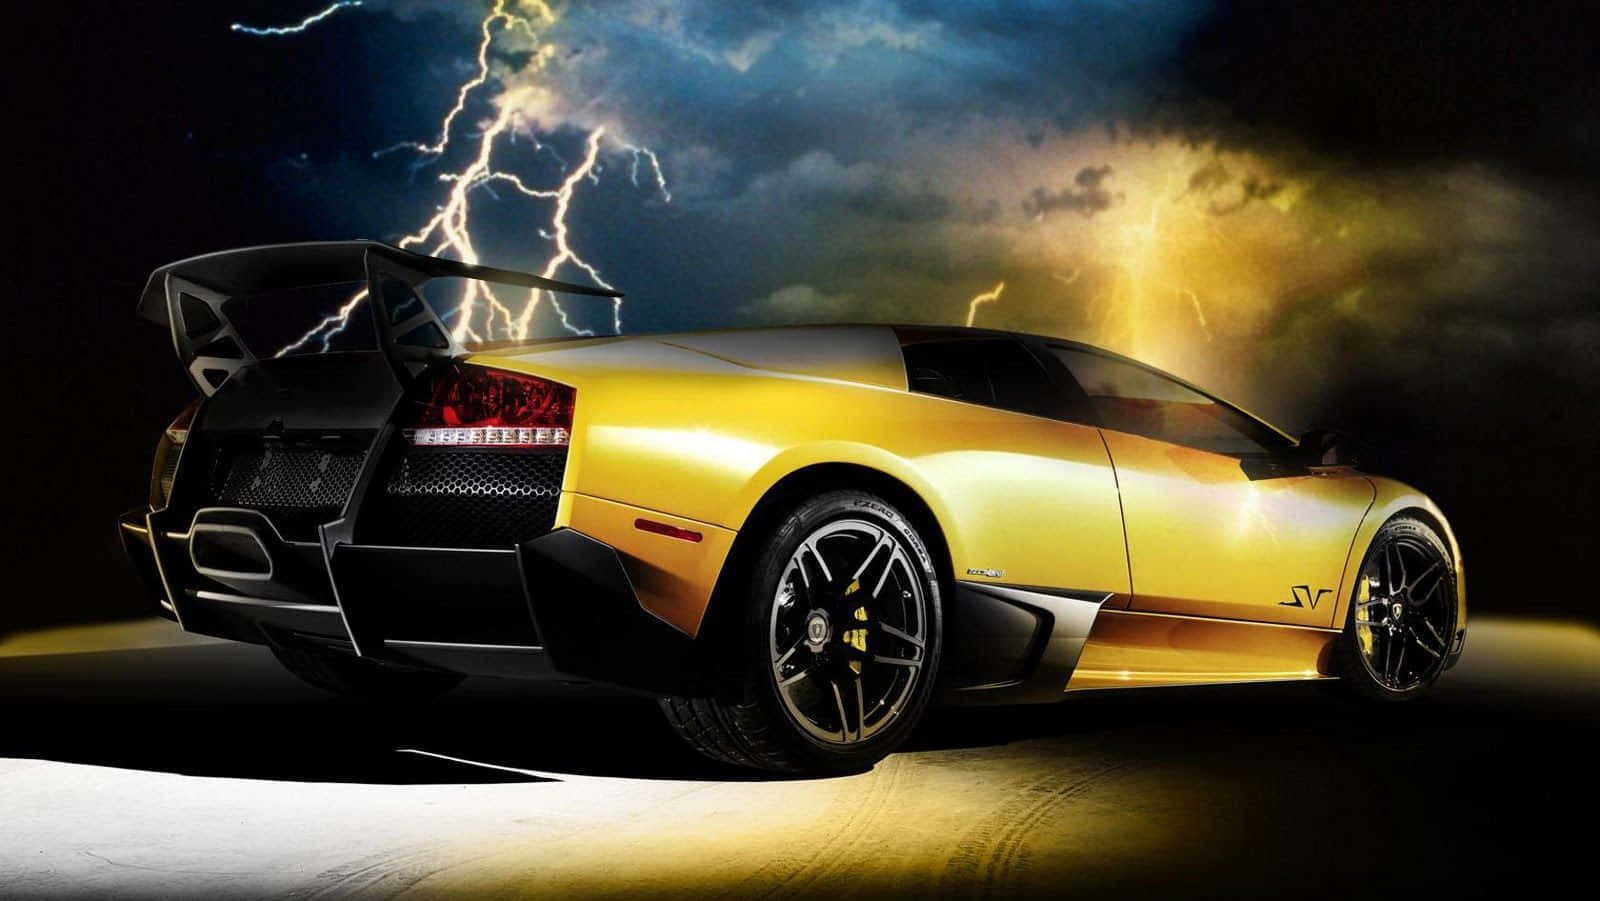 Luksus på hjul - Guld Lamborghini baggrund. Wallpaper